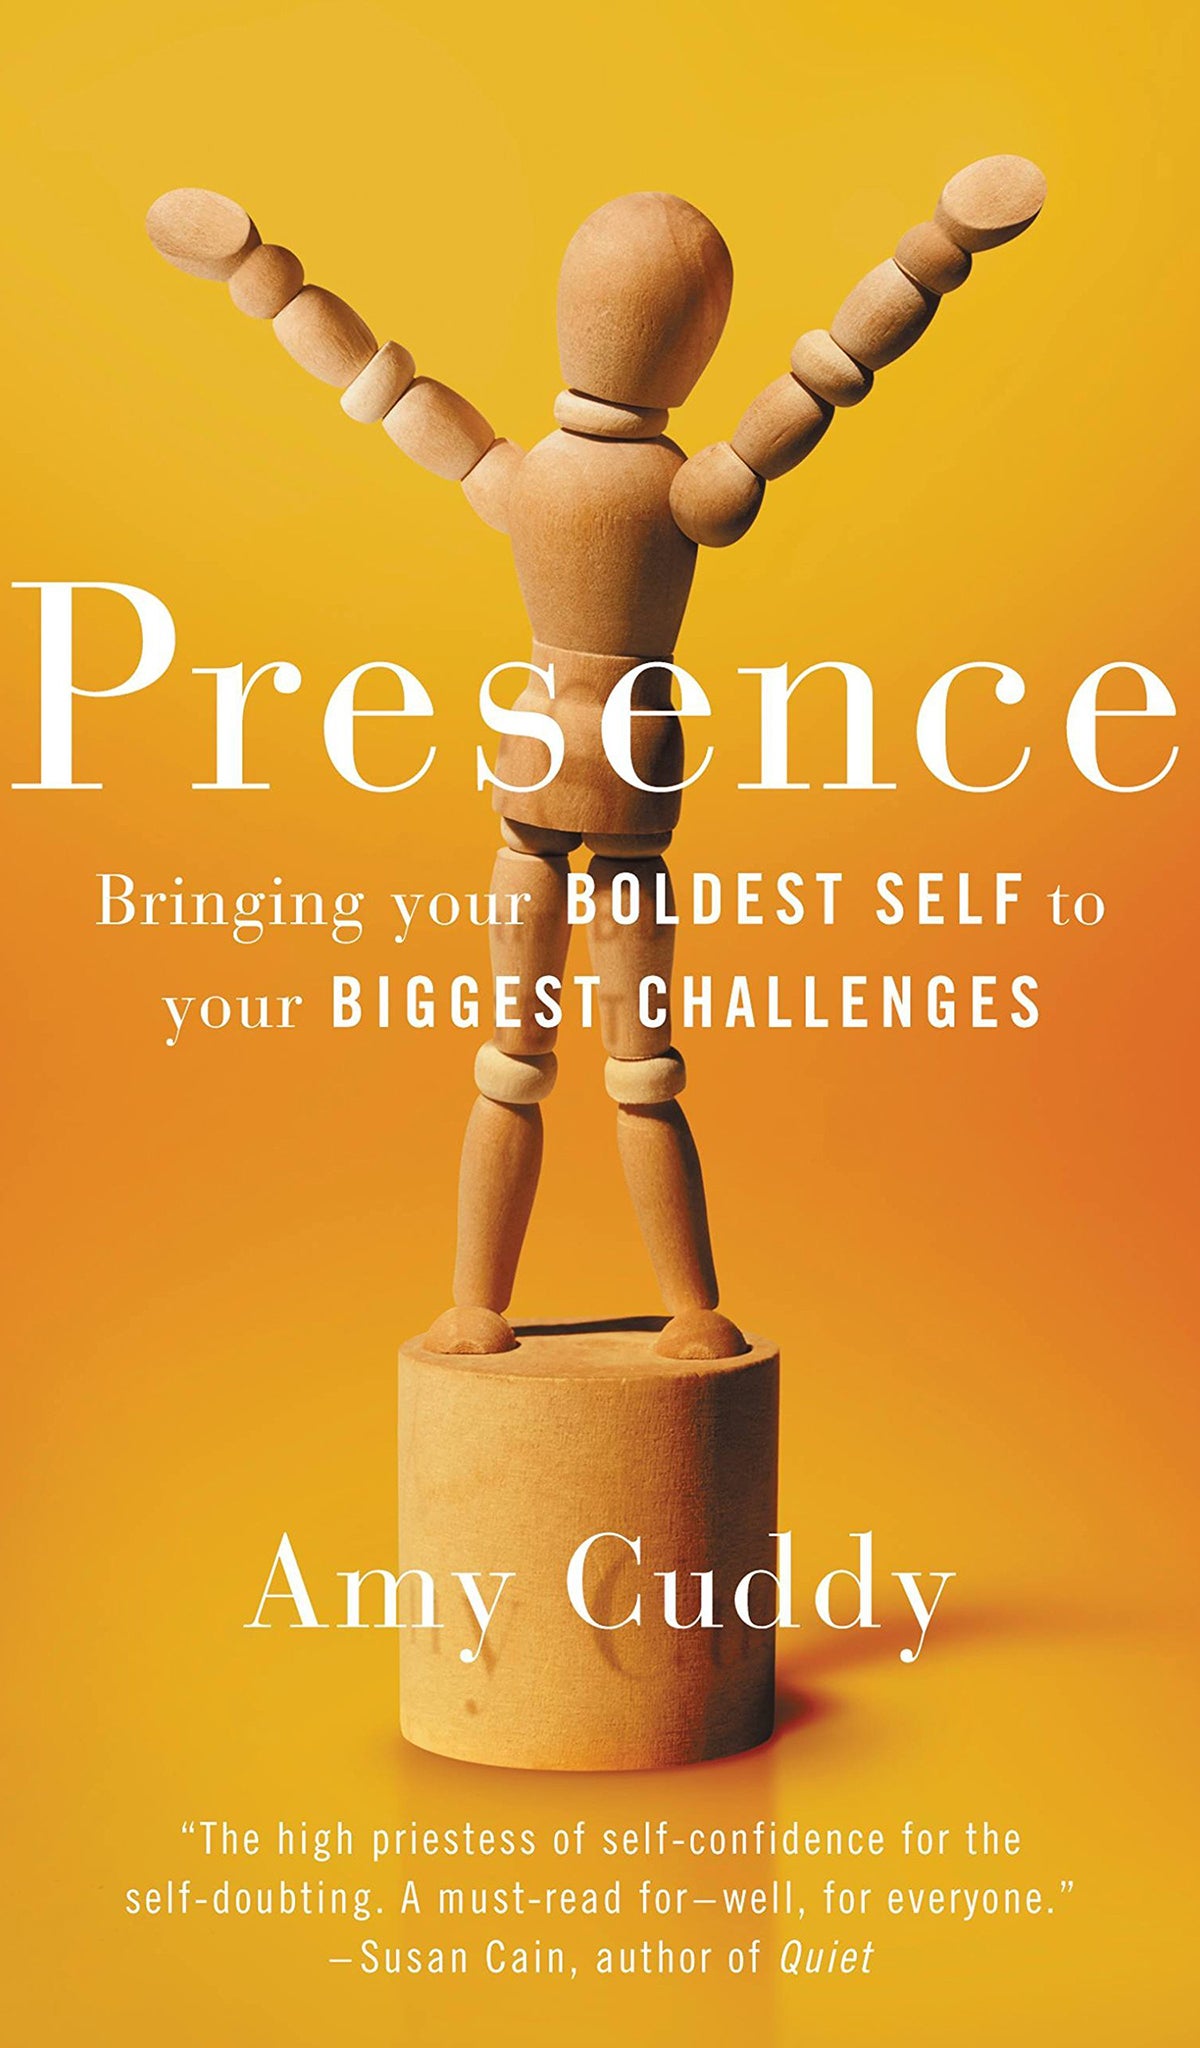 Prof Cuddy's new book Presence